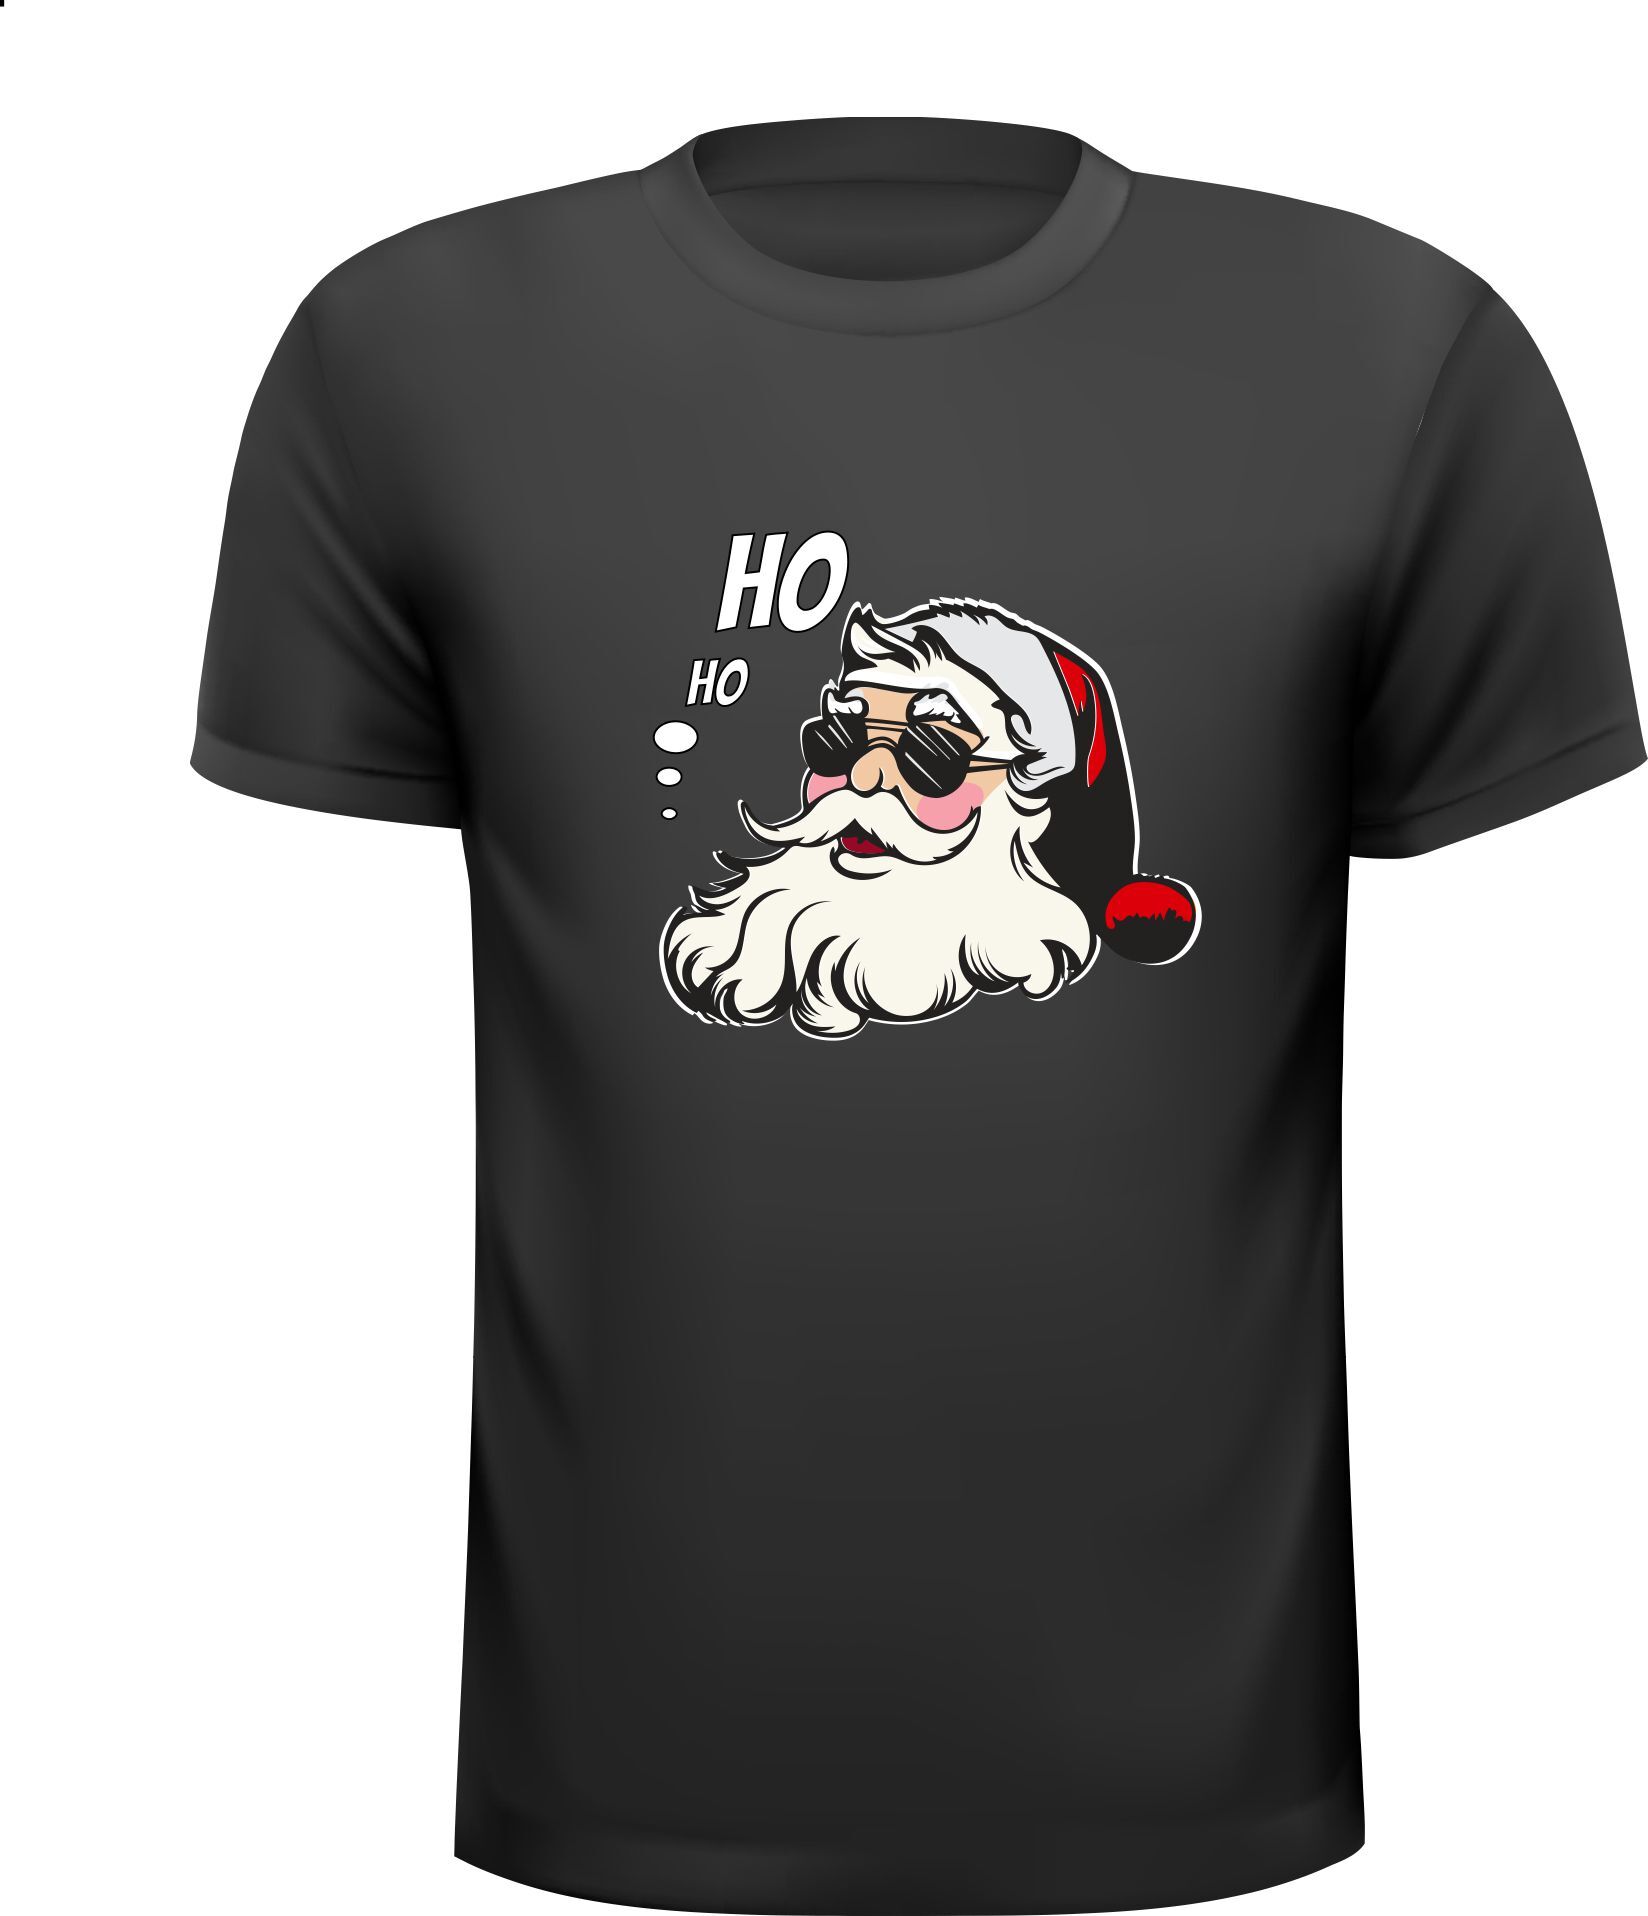 Grappig kerst T-shirt kerstman ho ho ho